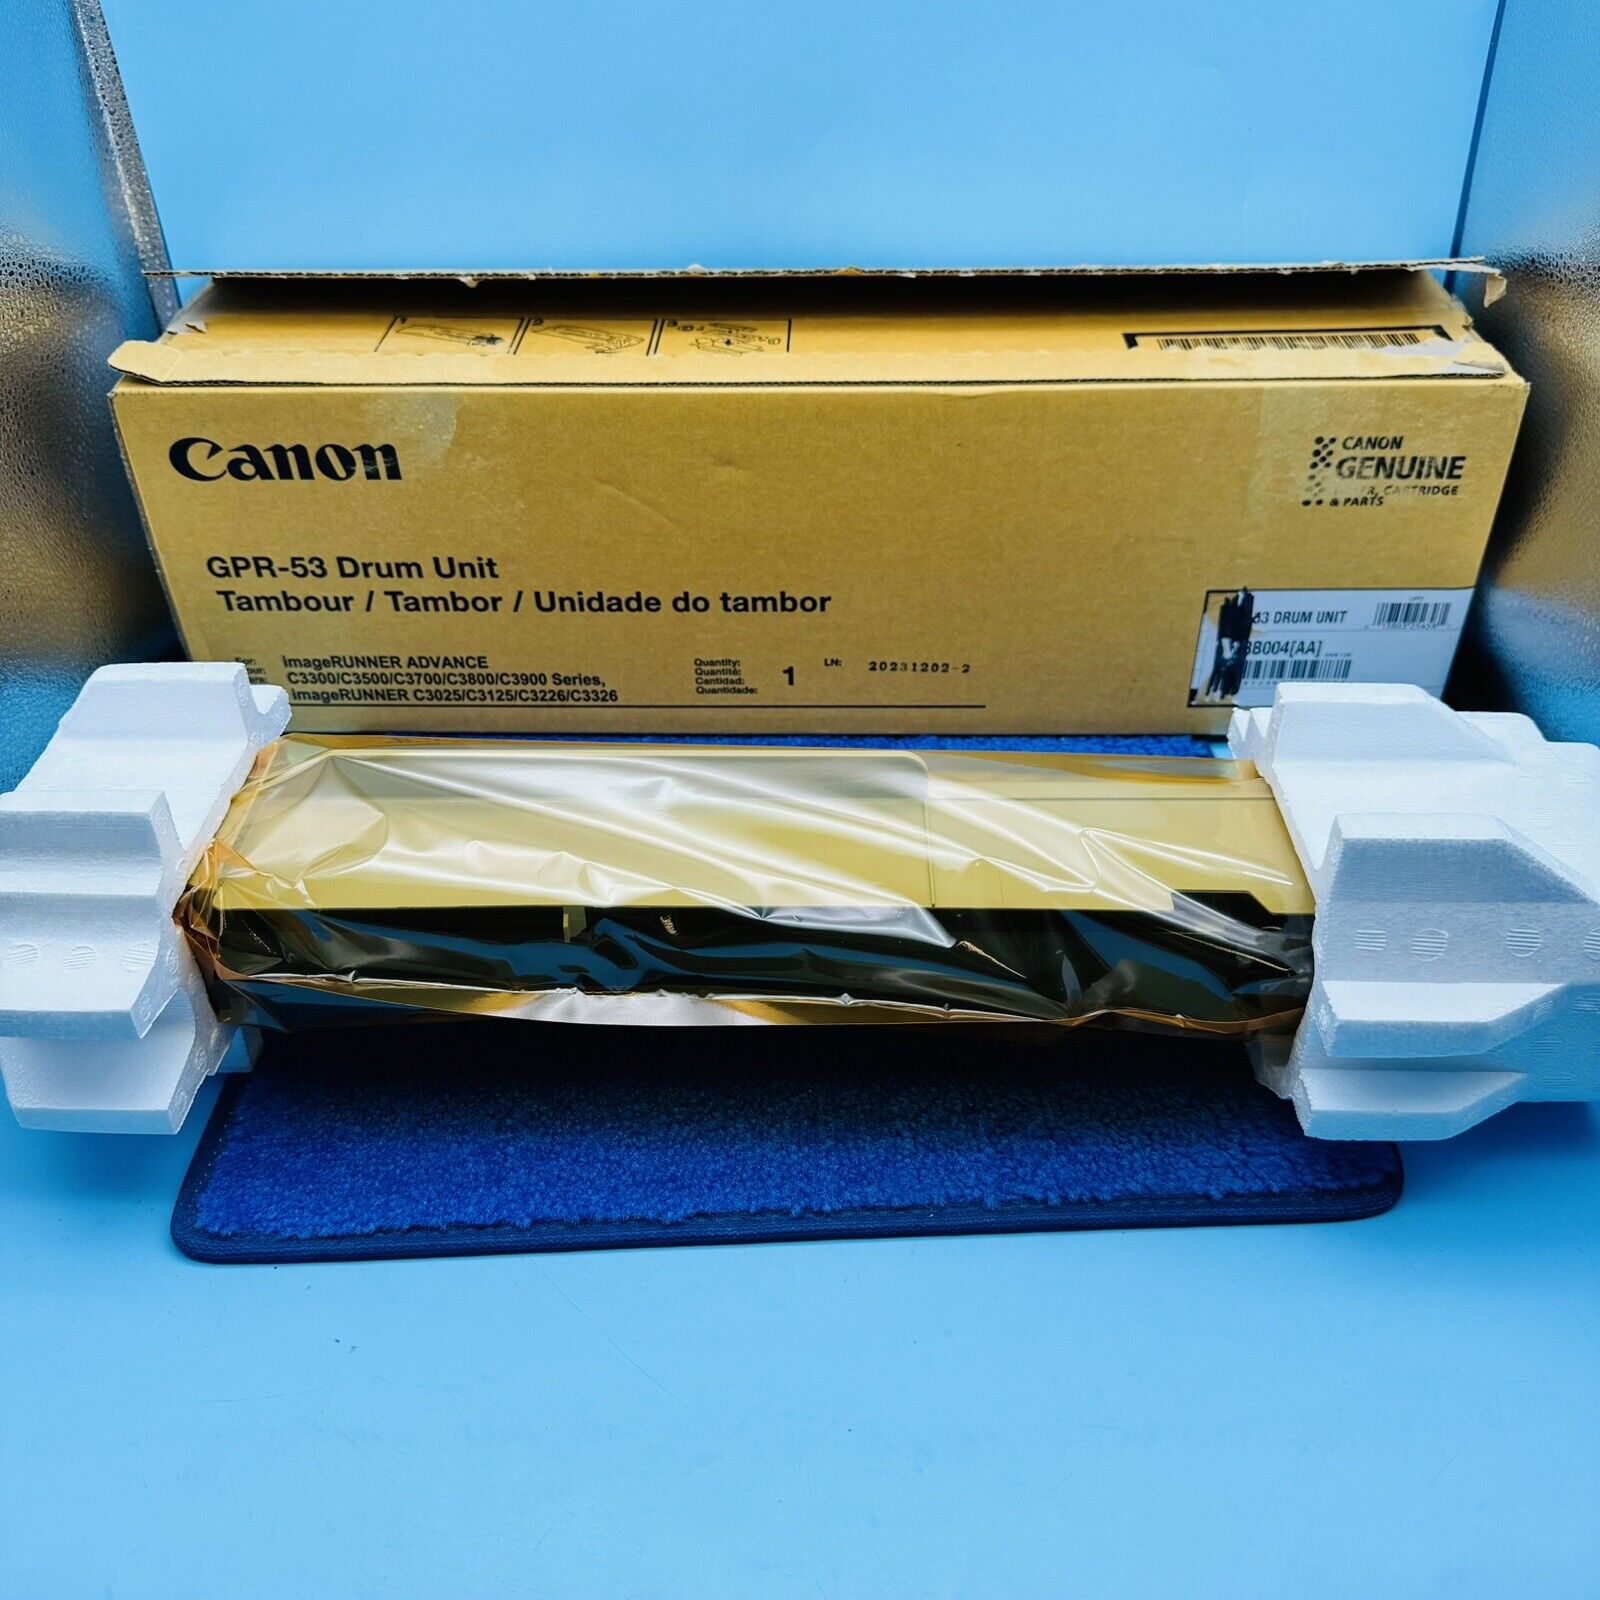 Canon GPR-53 Drum Unit 8528B004AA - Open Box - Sealed Bag